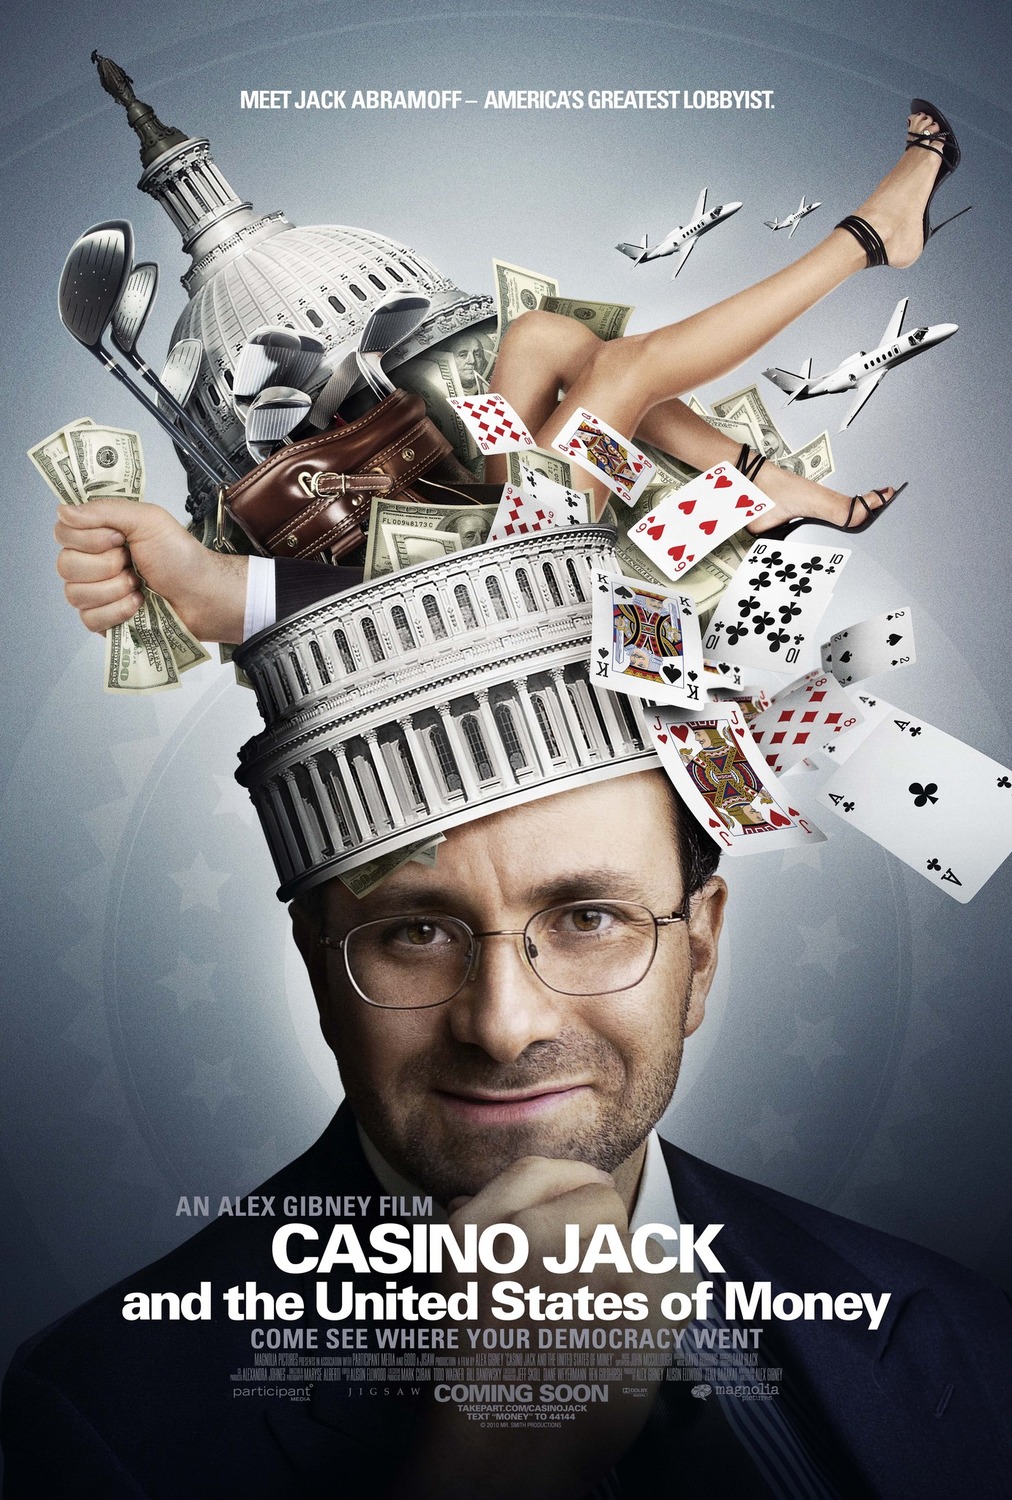 casino jack full movie online free